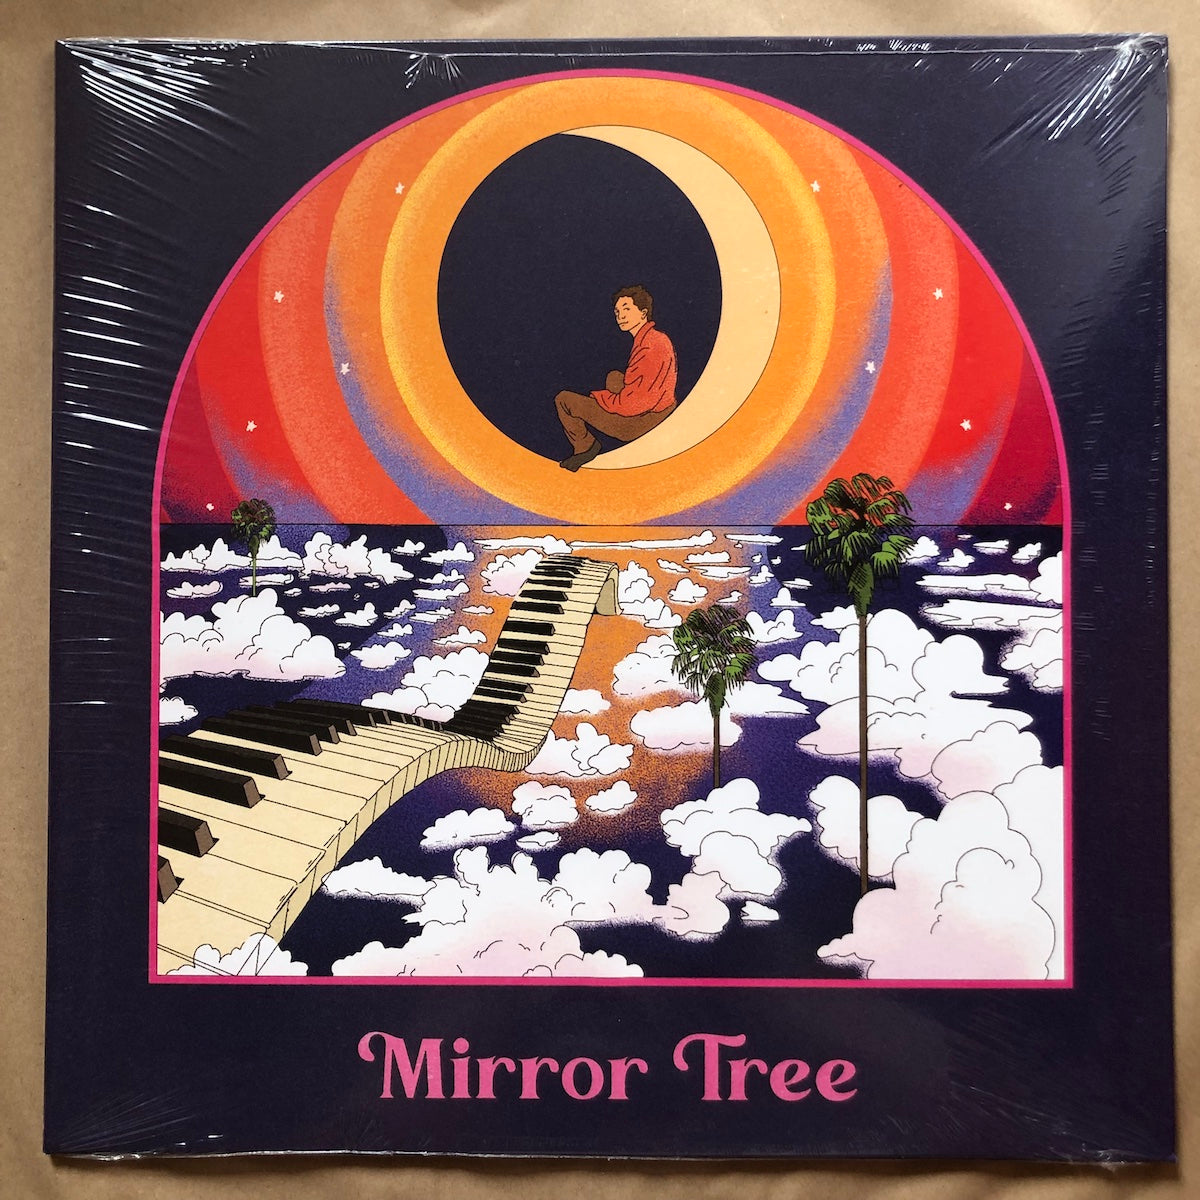 Mirror Tree: Vinyl LP